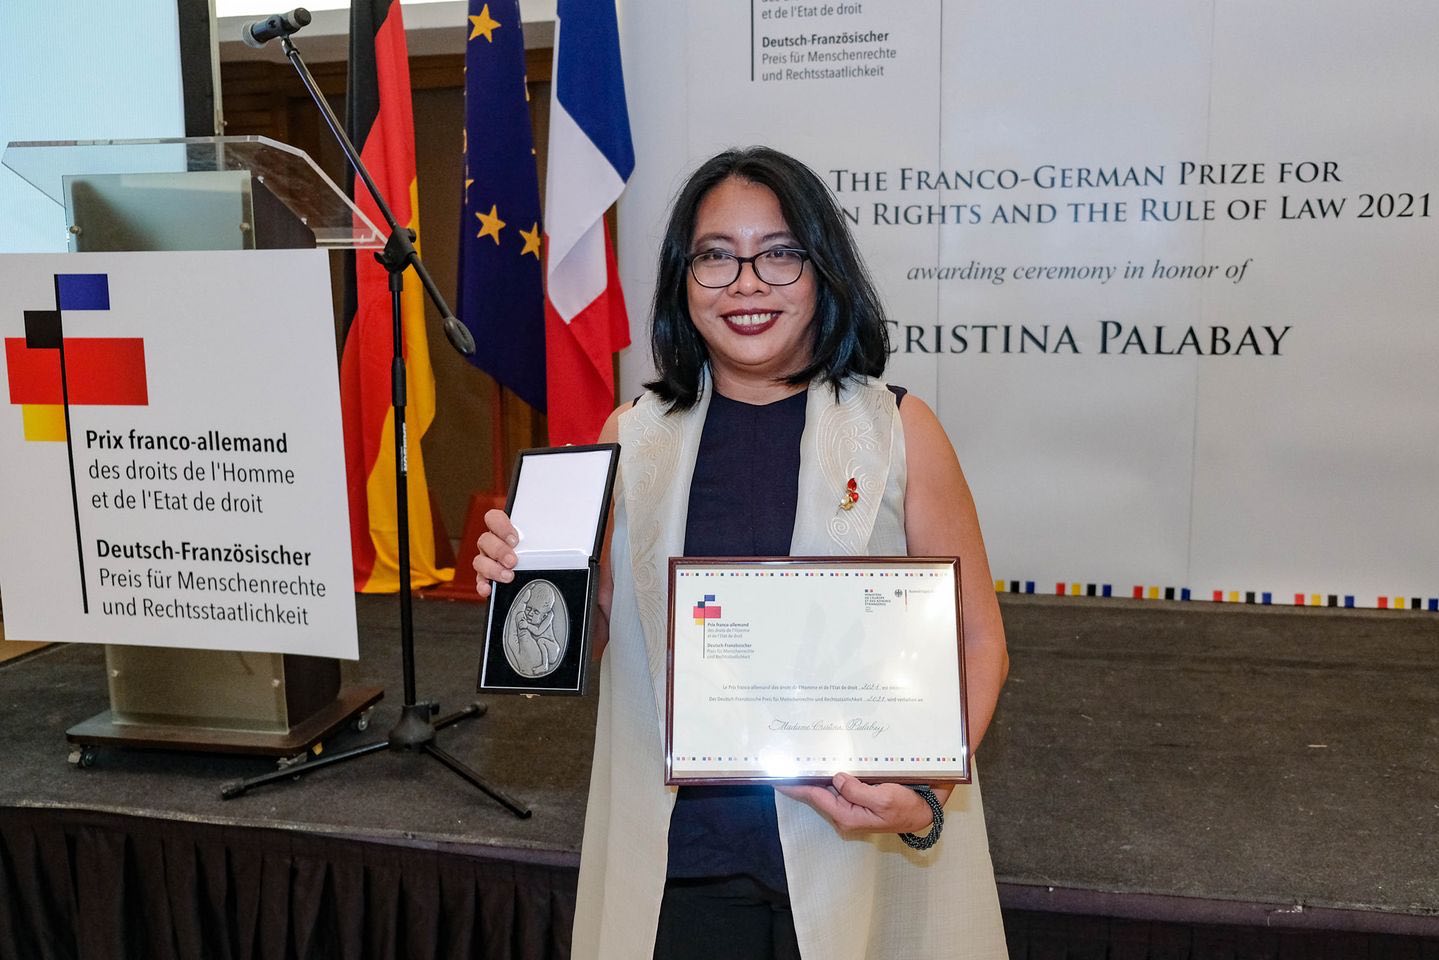 Cristina Palabay awarded Franco-German Prize